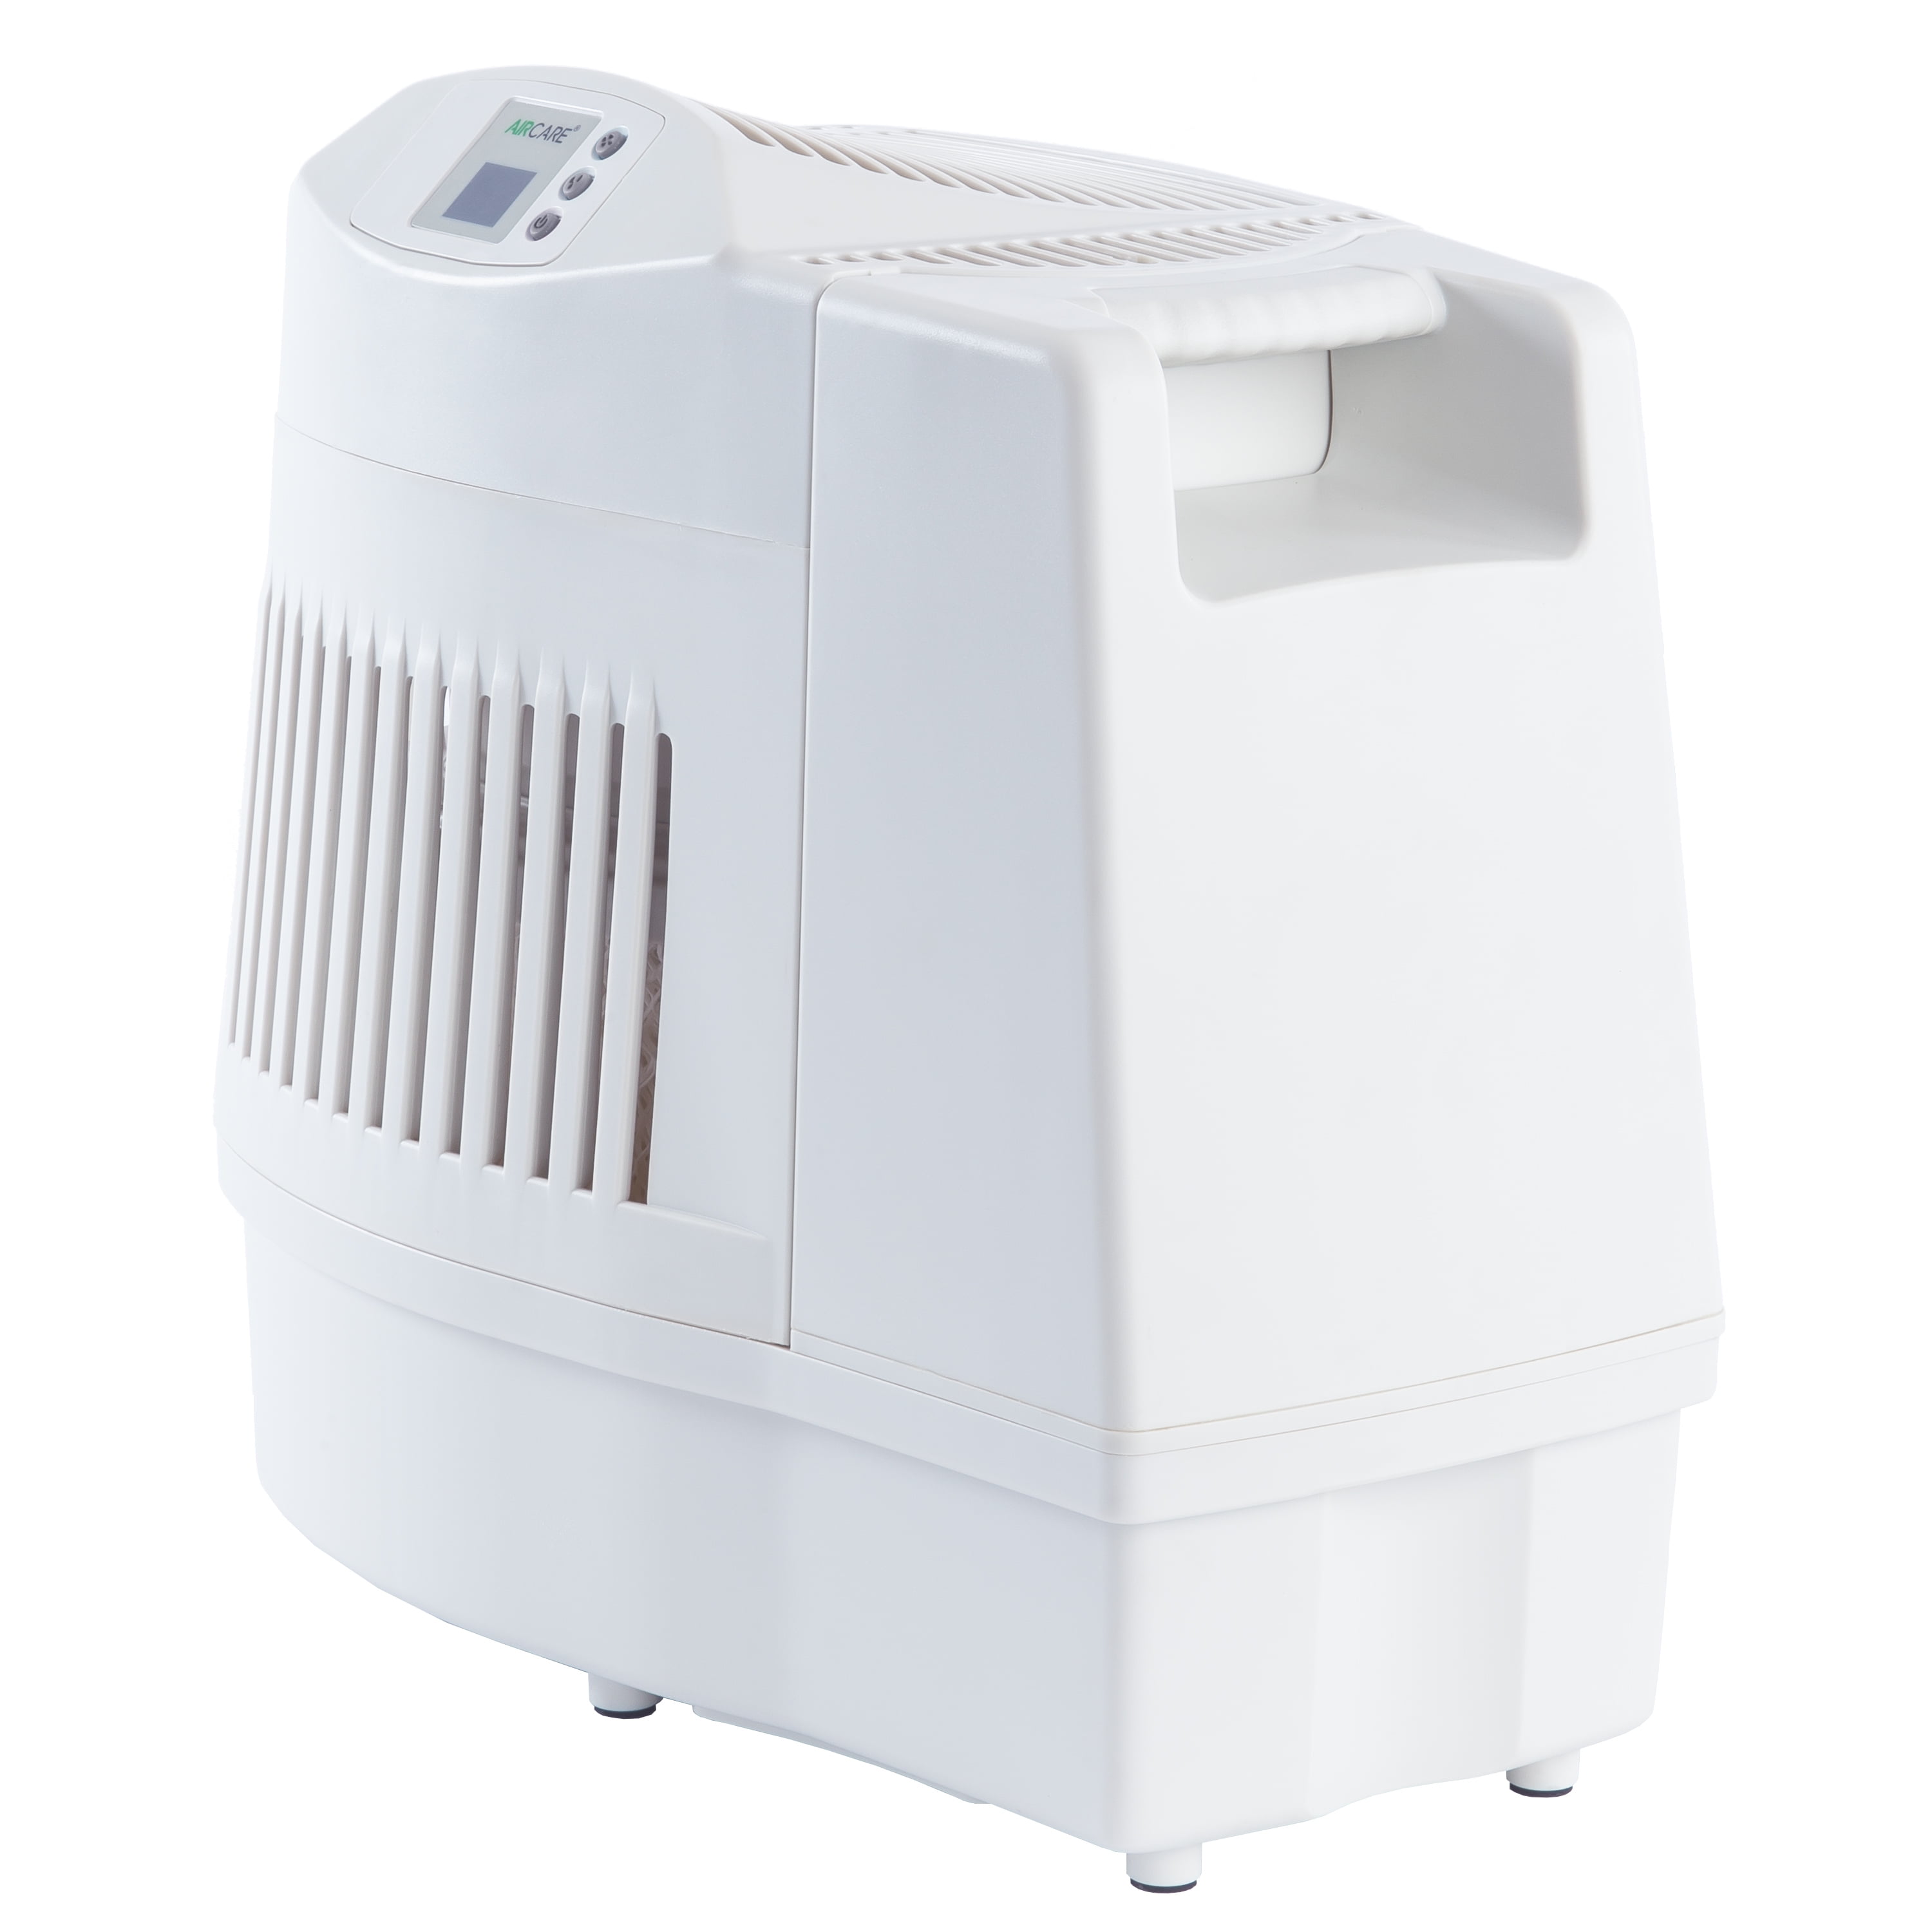 Essick Air MA0800 Digital Whole House Console Style Evaporative Humidifier White 